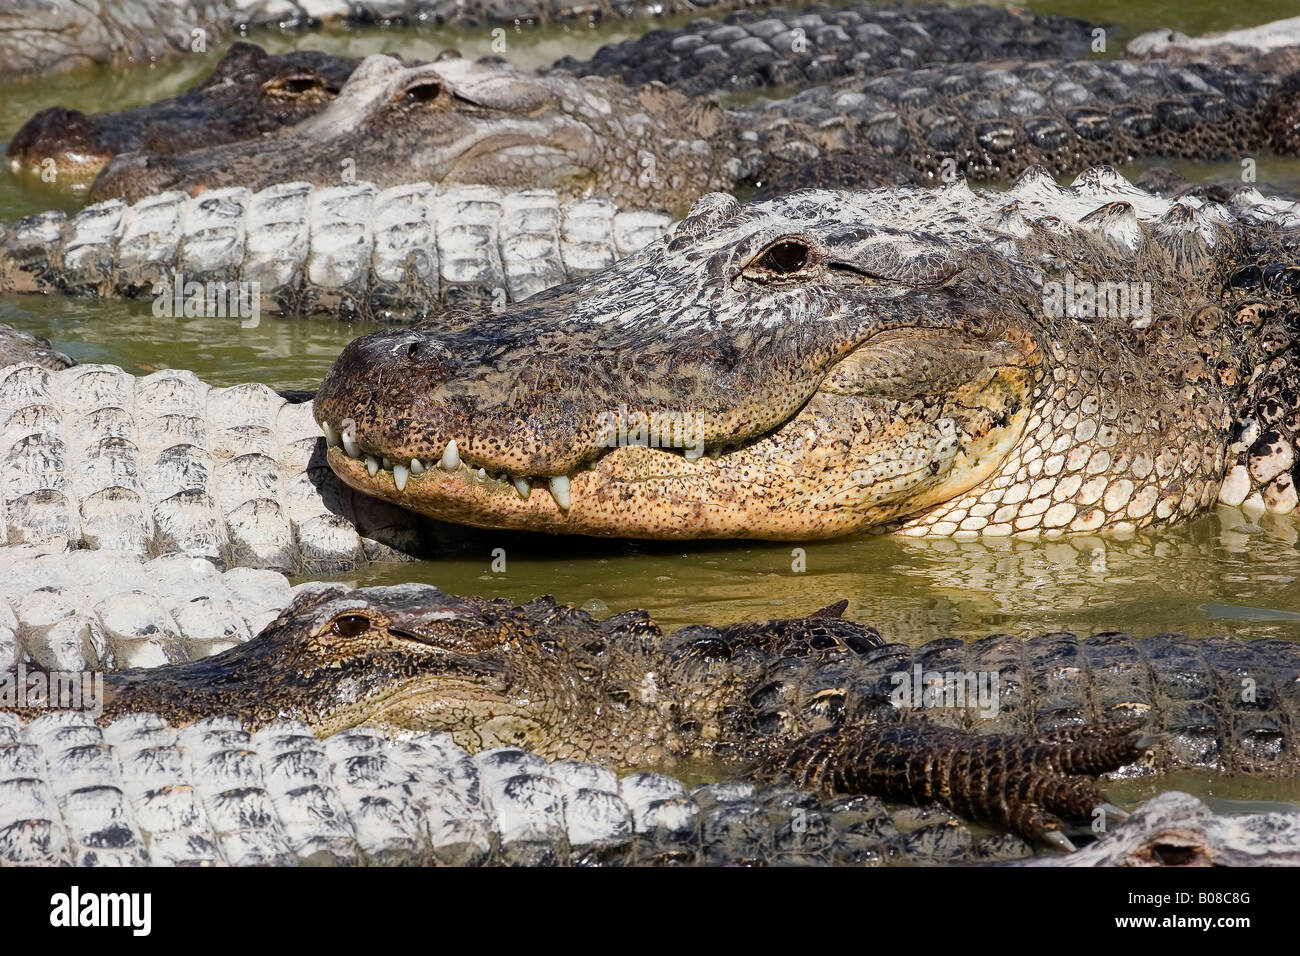 Focus on one alligator in group of alligators Stock Photo